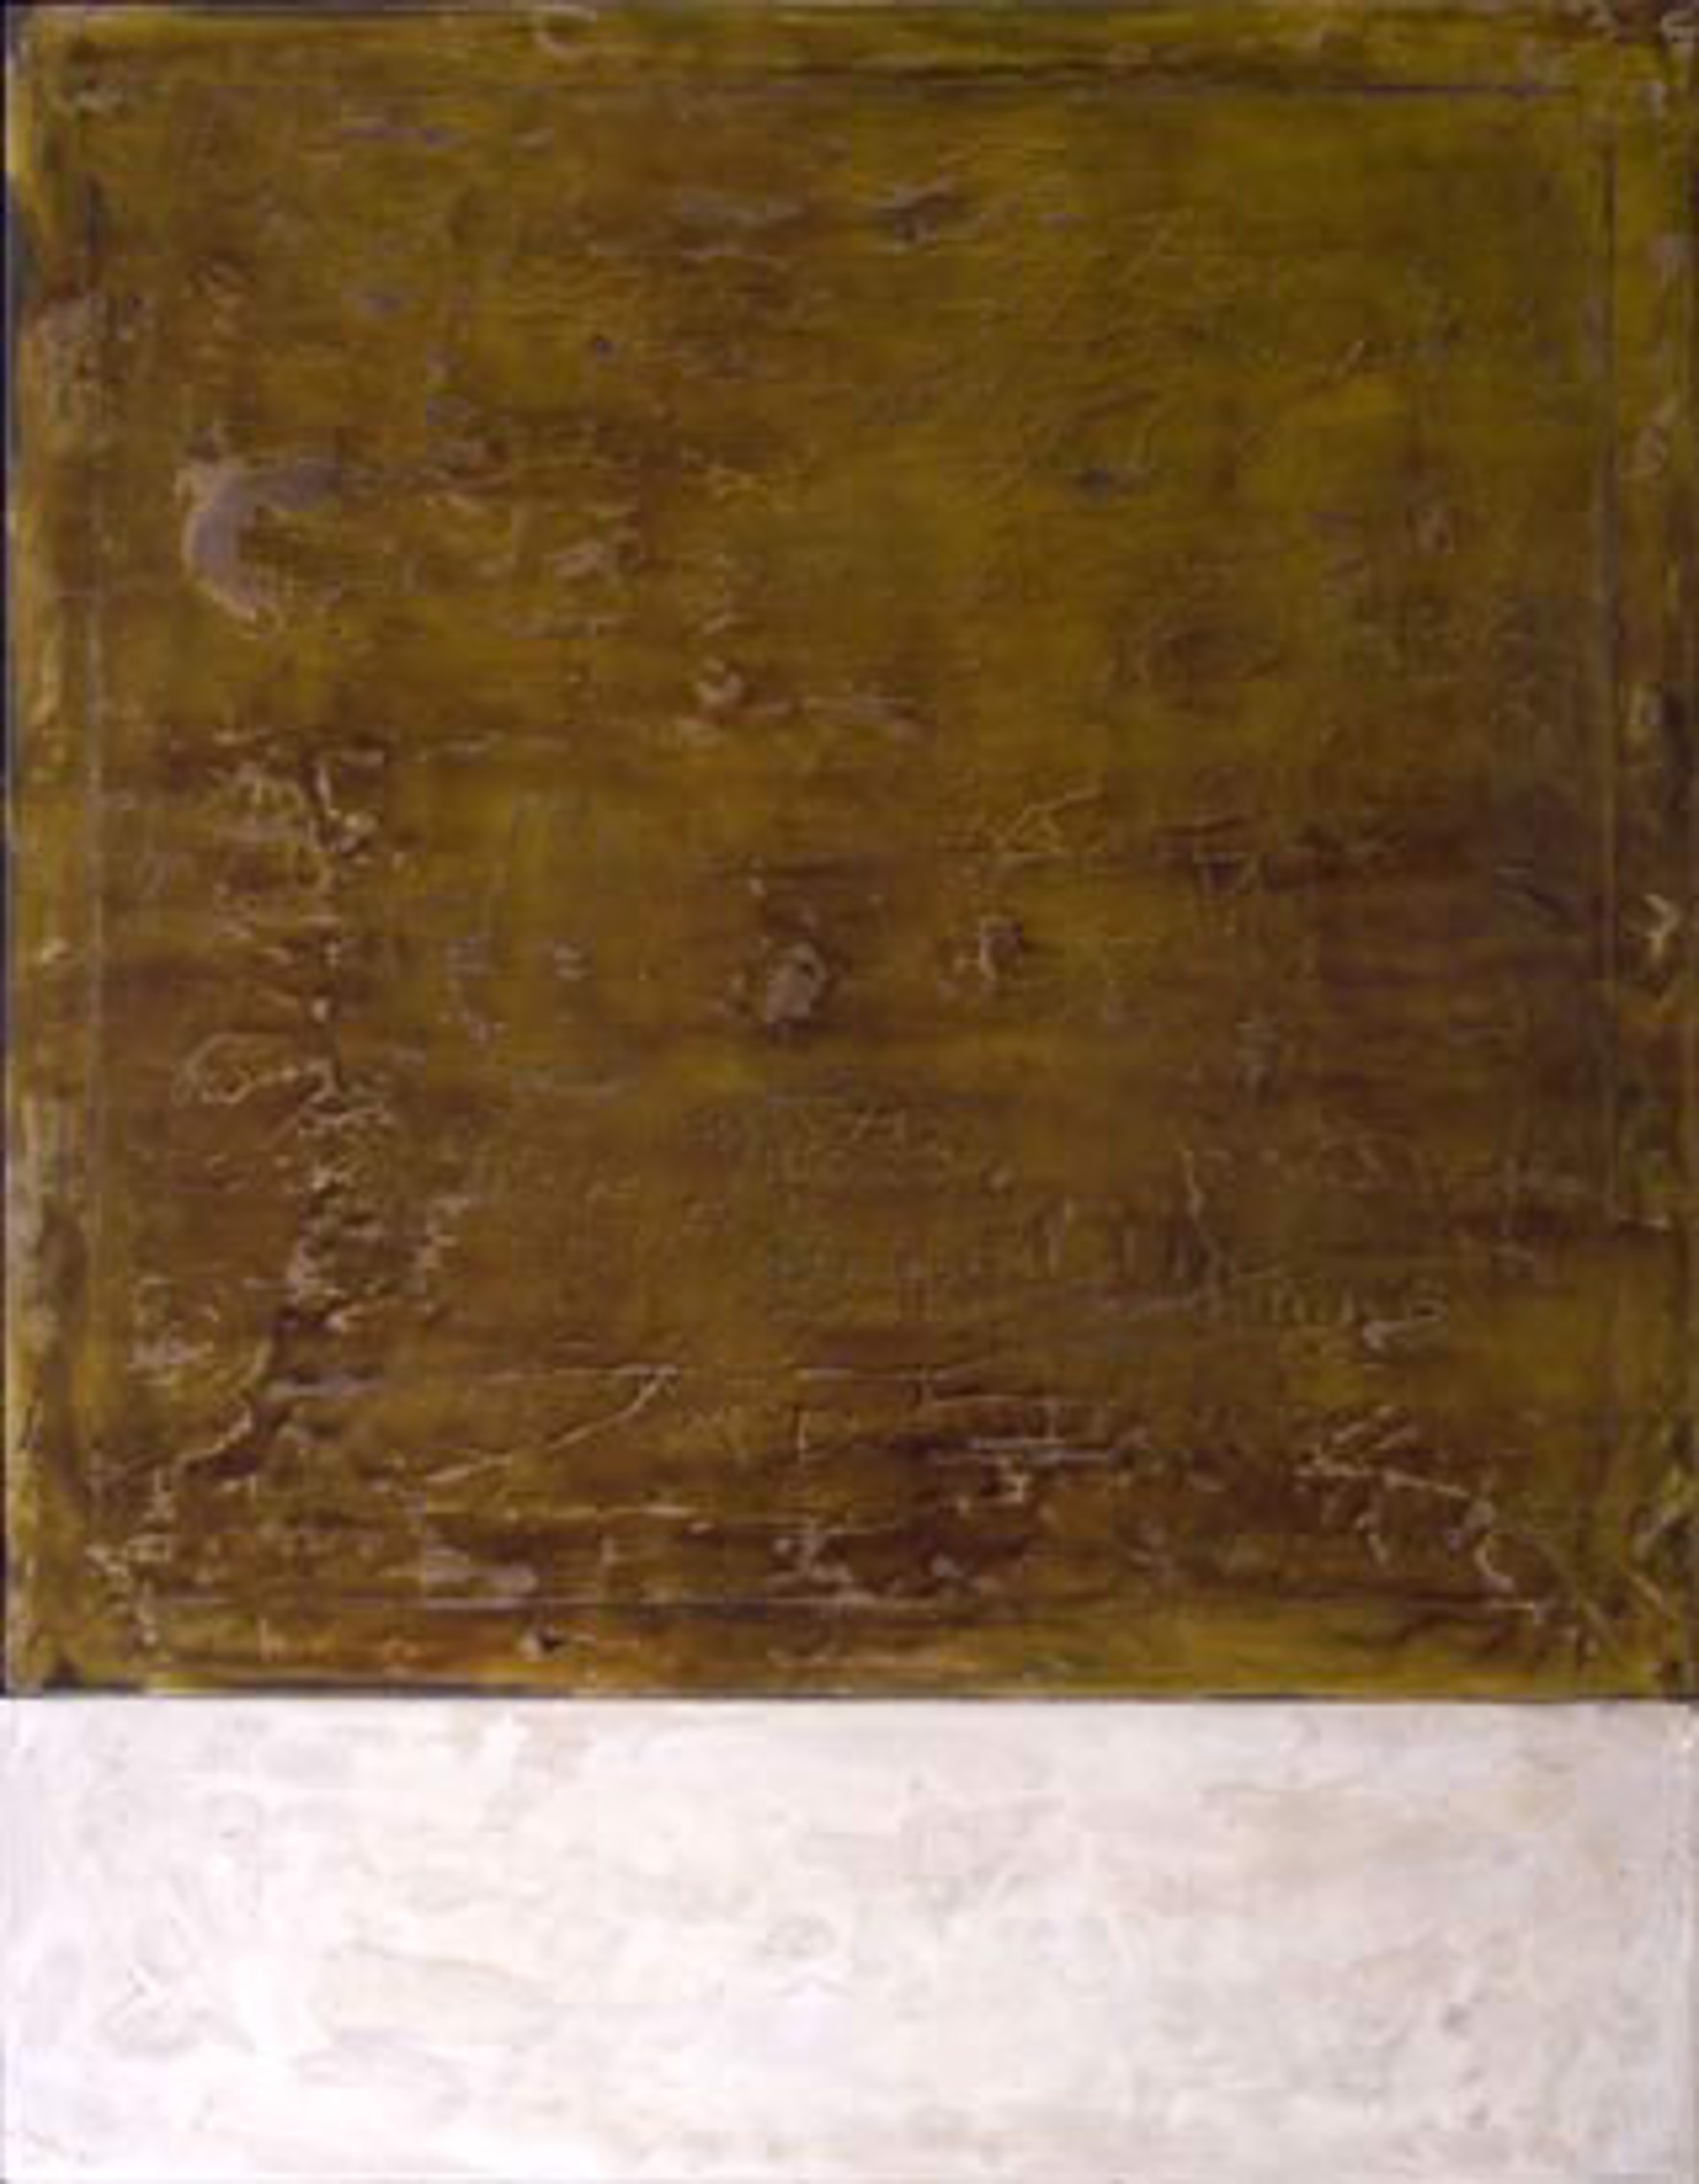 Terreno VII by John Schuyler